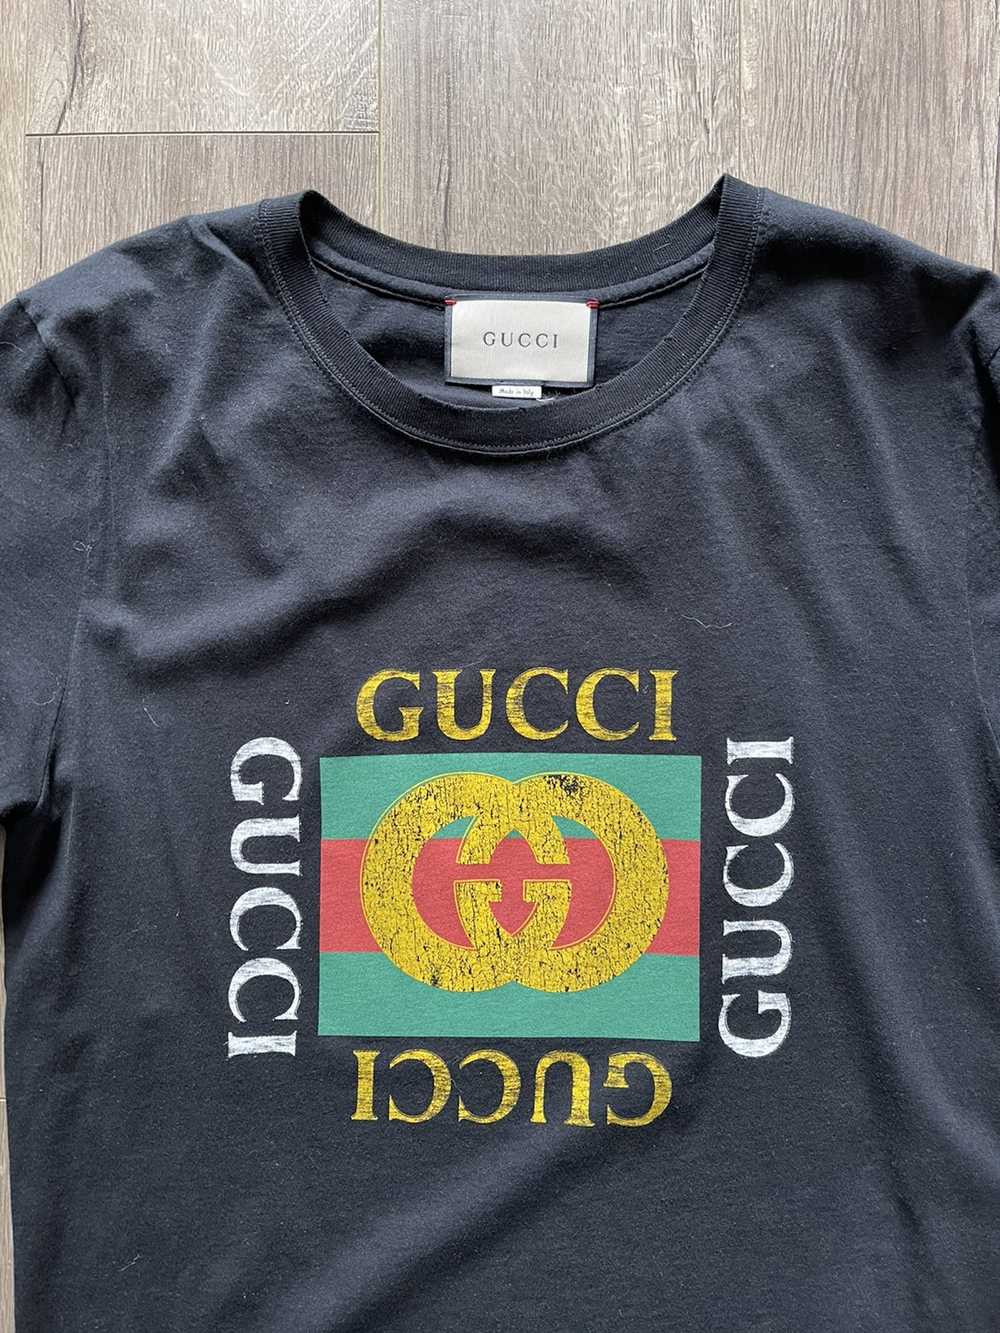 Gucci Gucci - vintage logo black t-shirt - image 2